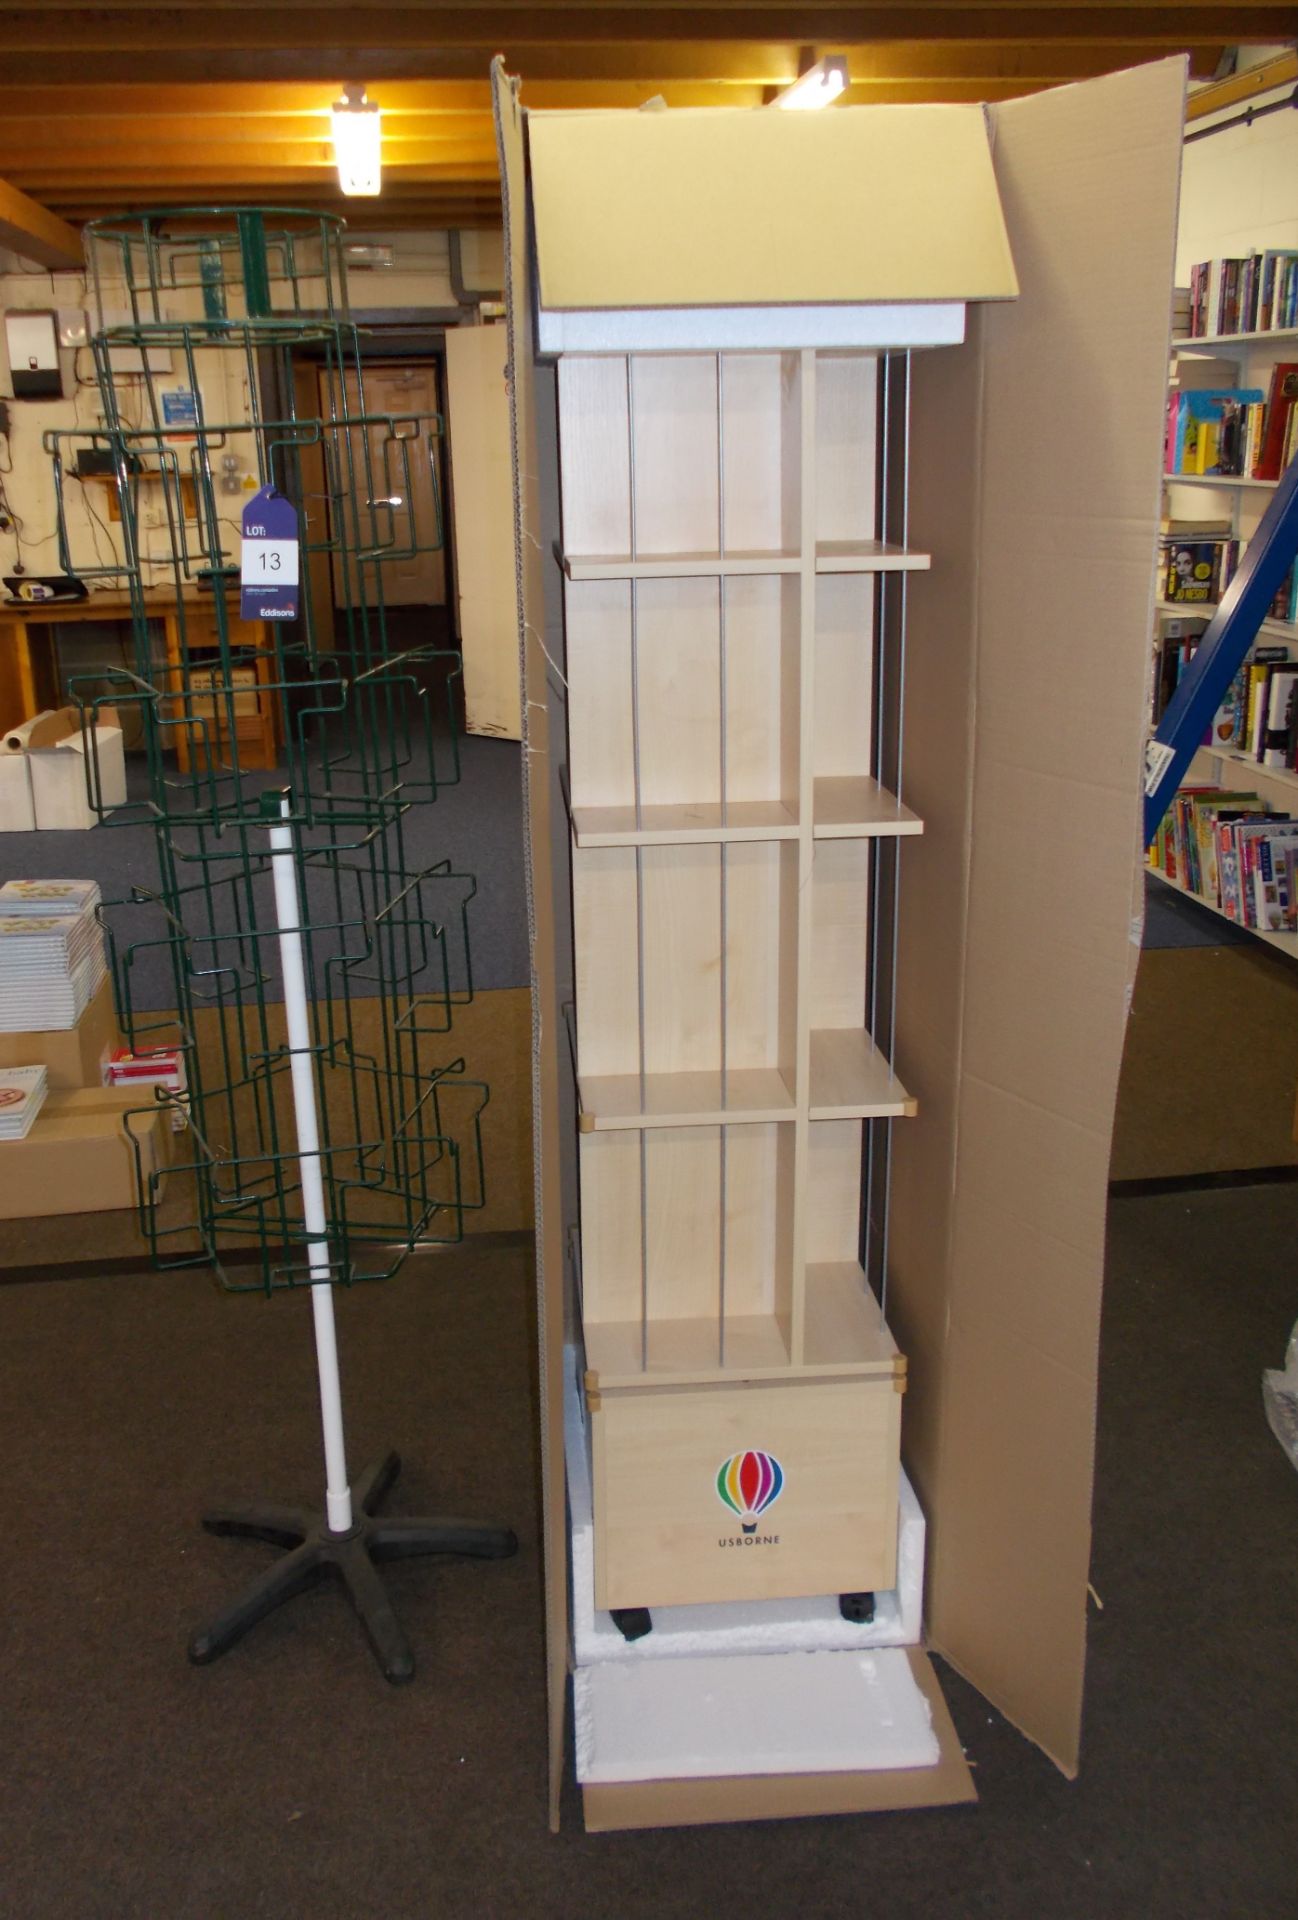 2 x rotating book displays